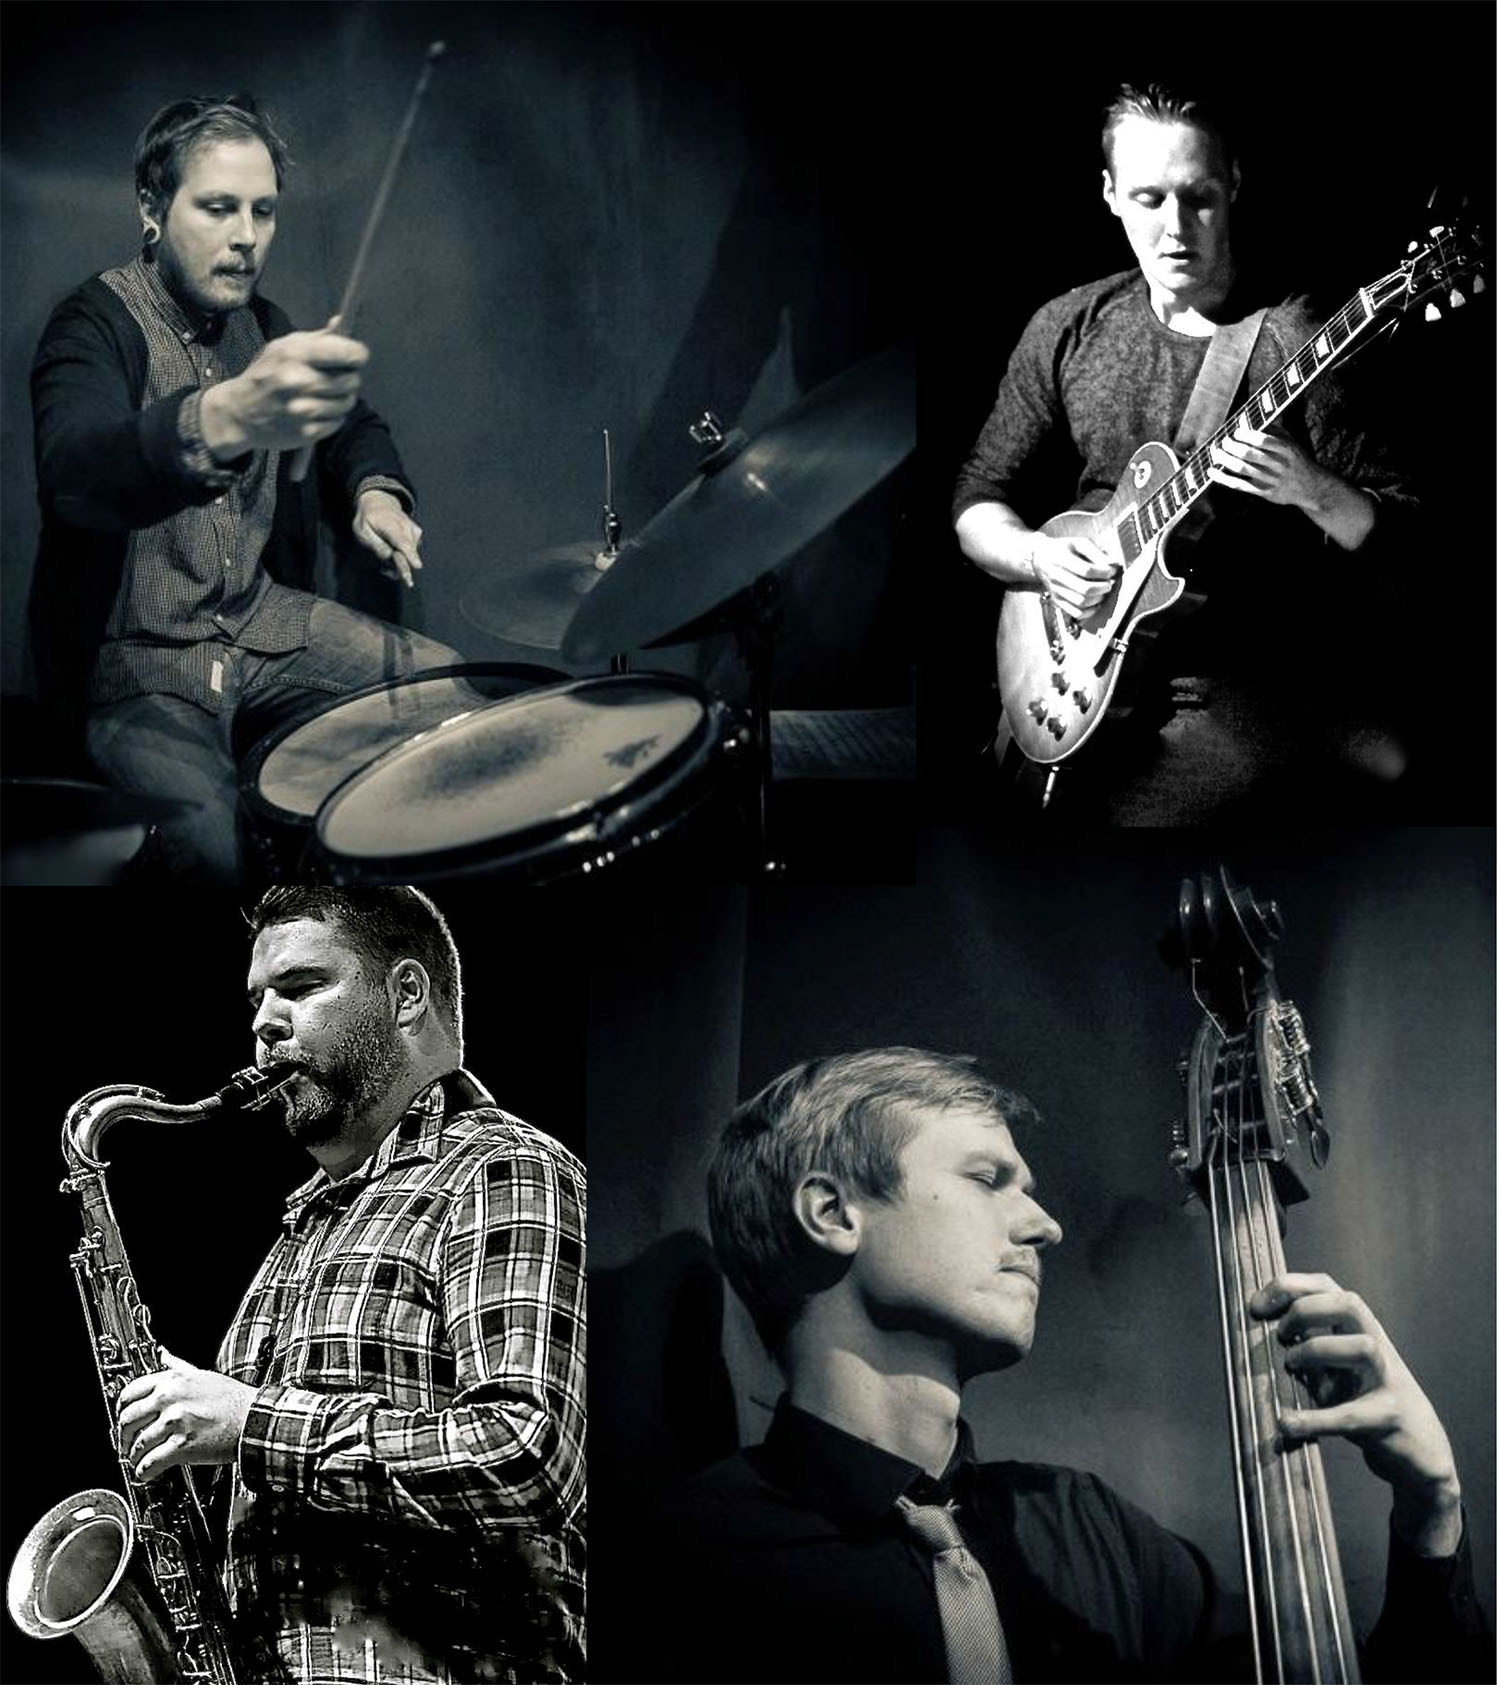 Orfeas Wärdig Tsoukalas Quartet: Kristoffer Rostedt drums, Daniel Edvardsson guitar, Orfeas Wärdig Tsoukalas saxophone and Simon Petersson double bass